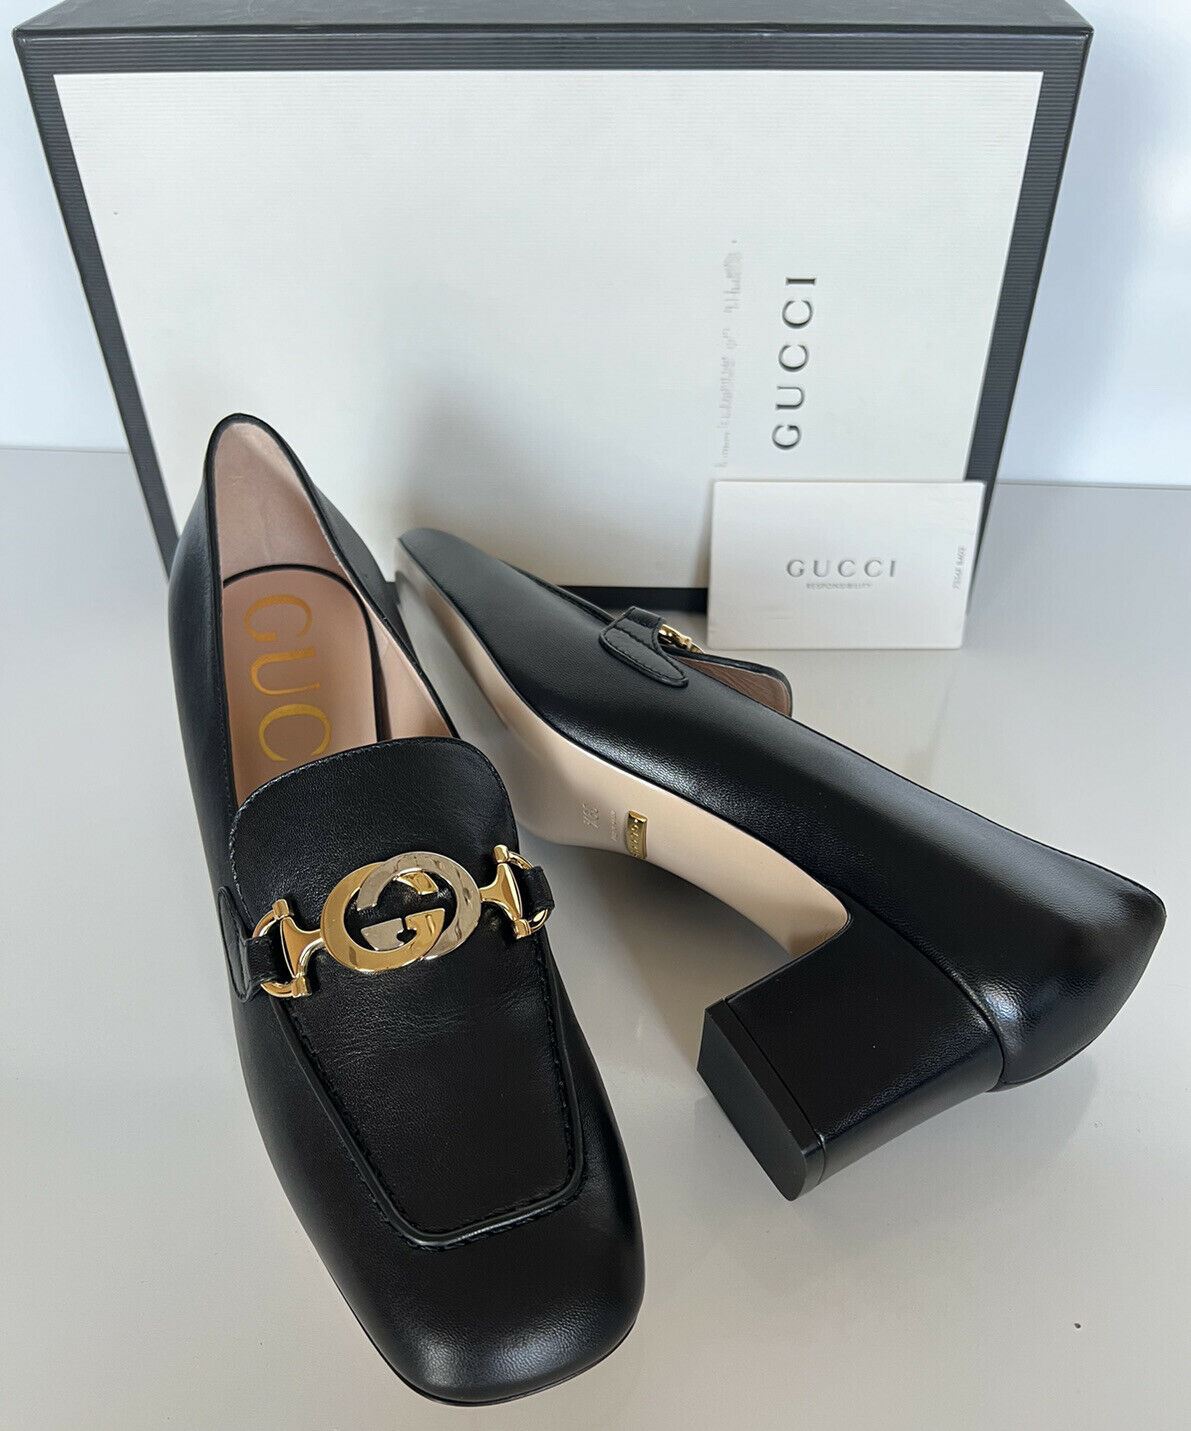 NIB $890 Gucci Malaga Pump Leather Black Shoes 9.5 US (39.5 Euro) Italy 575832